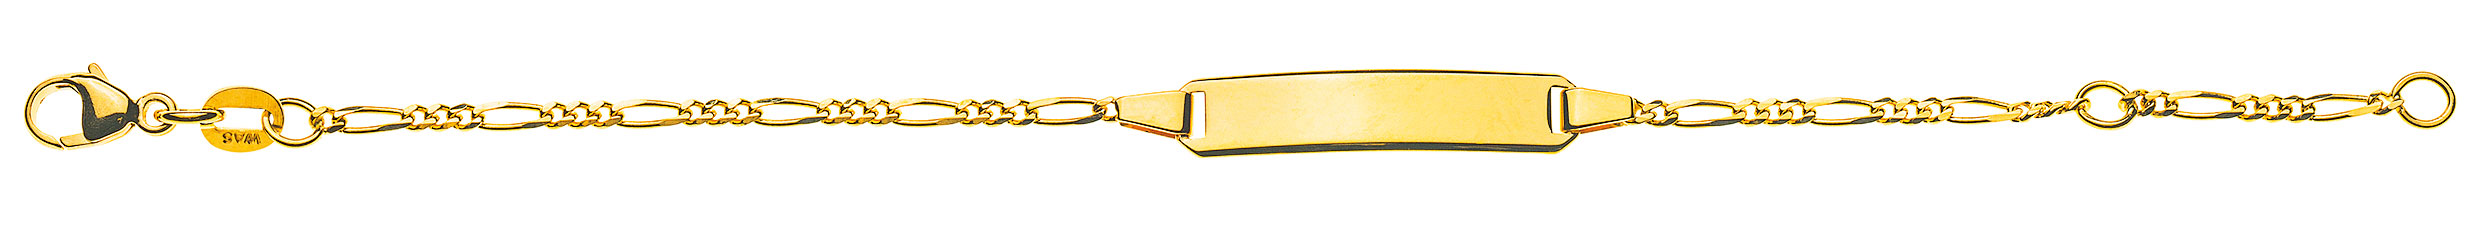 AURONOS Prestige ID-Bracelet en or jaune 18k Chaîne Figaro 16cm